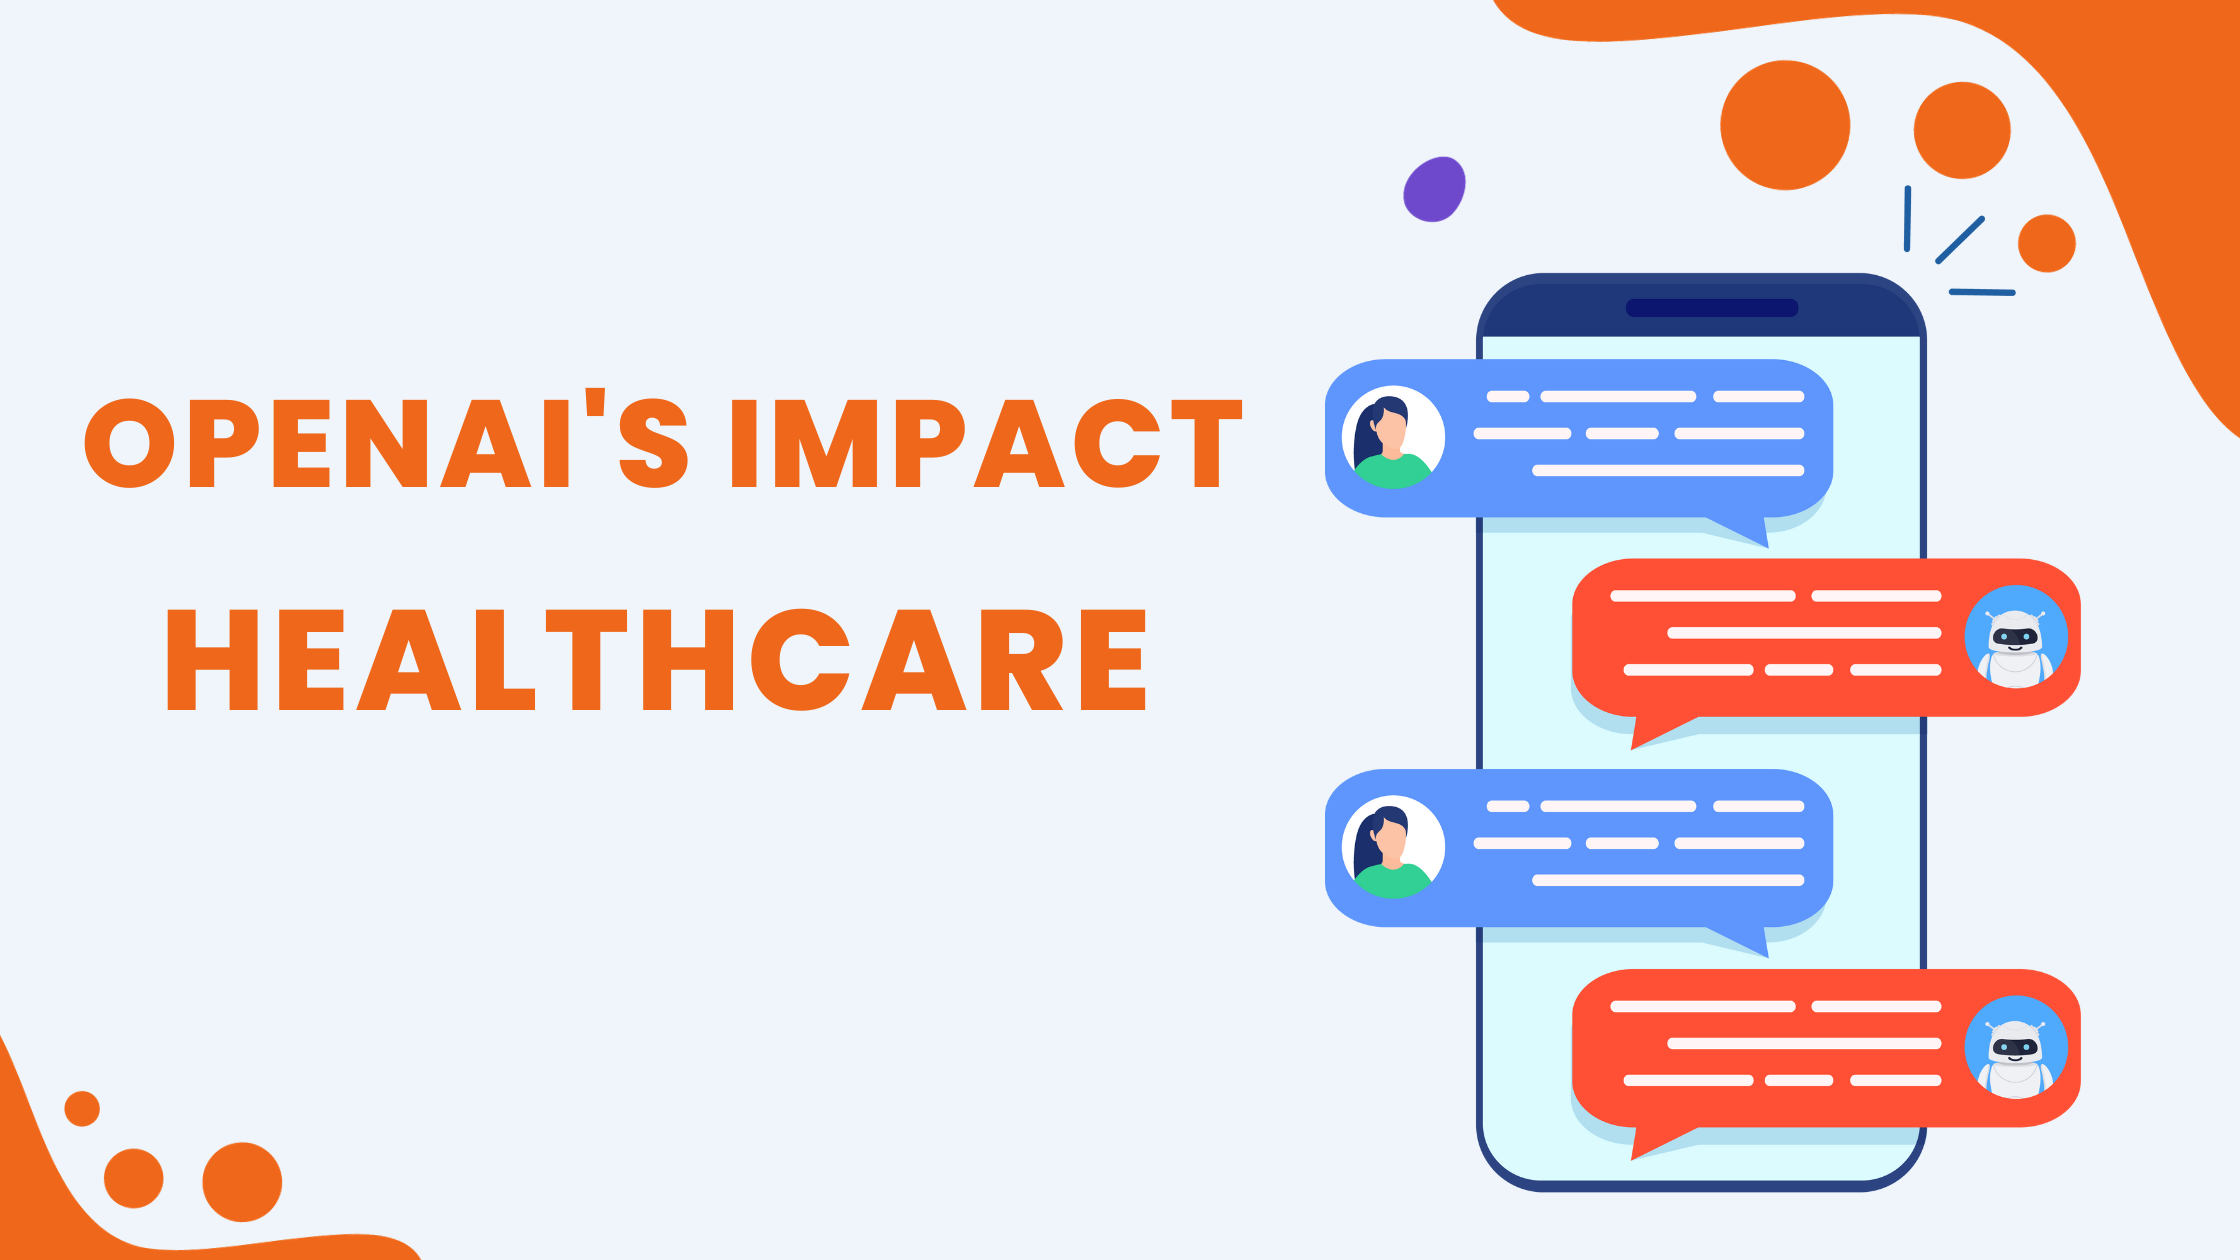 OpenAI's Impact on Healthcare